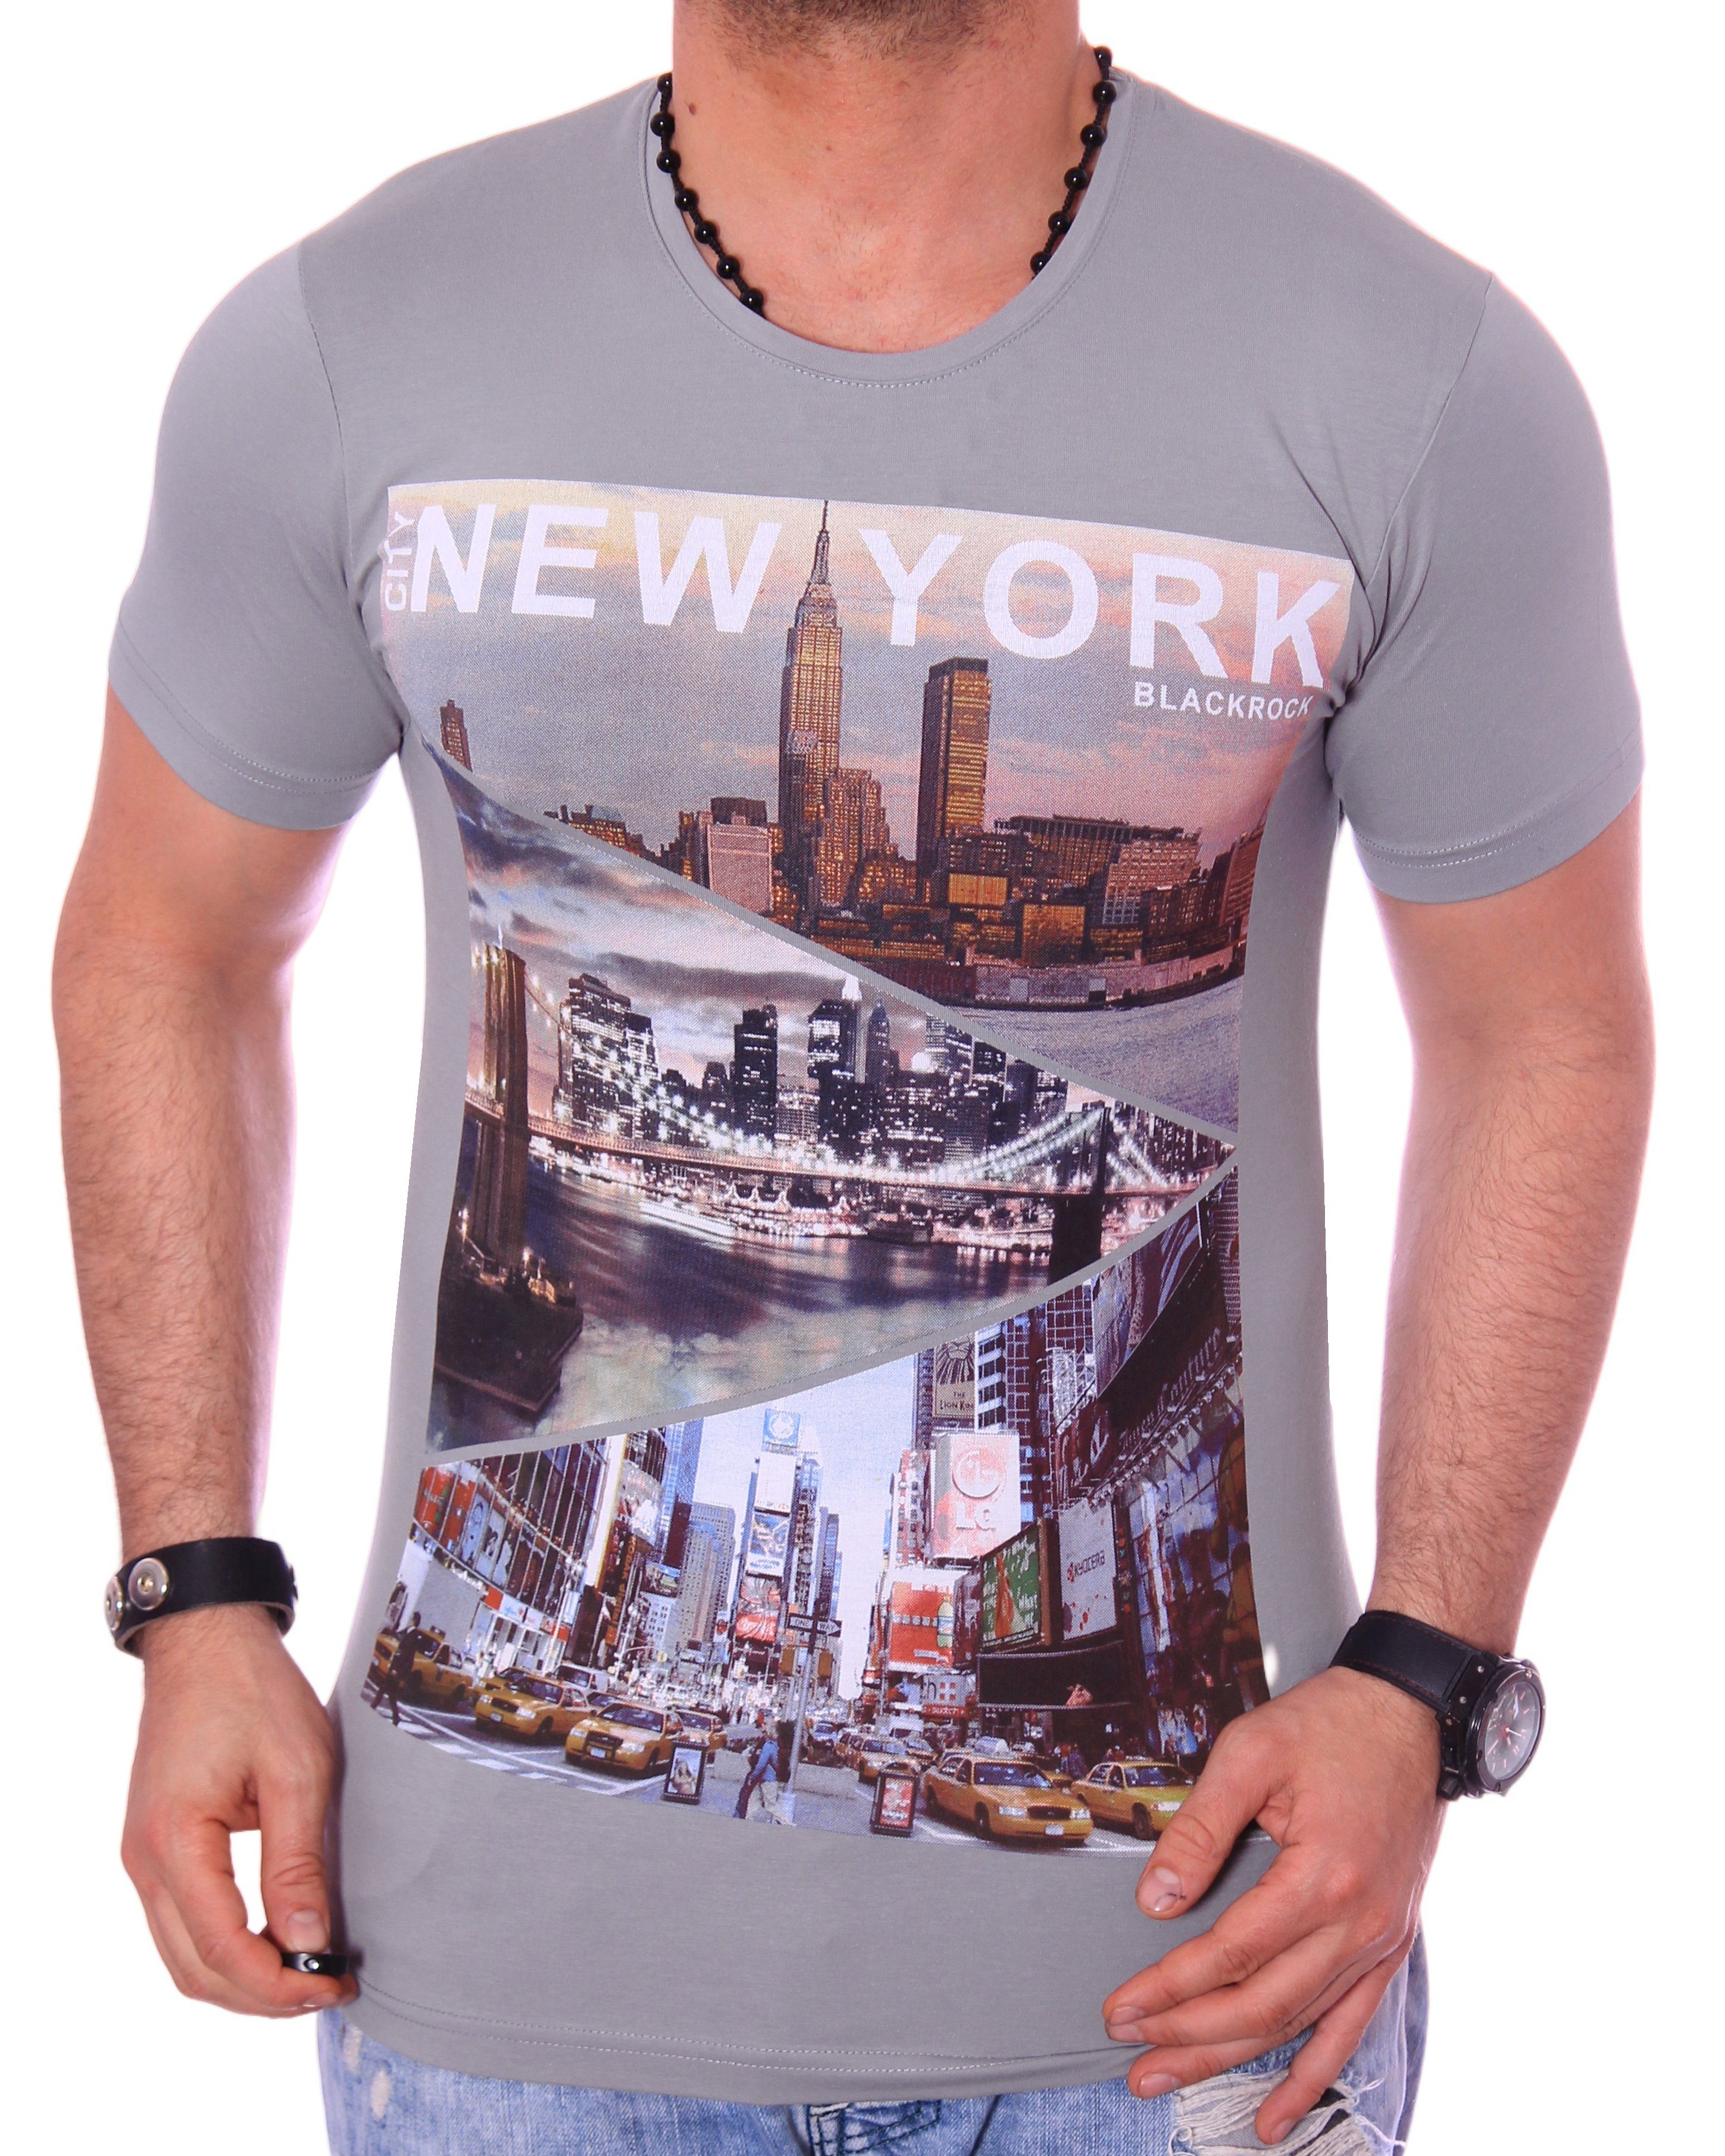 BLACKROCK T-Shirt Herren Shirt T-Shirt Urlaub USA Amerika New York kurzarm Rundhals bedruckt Print Slim-Fit Grau